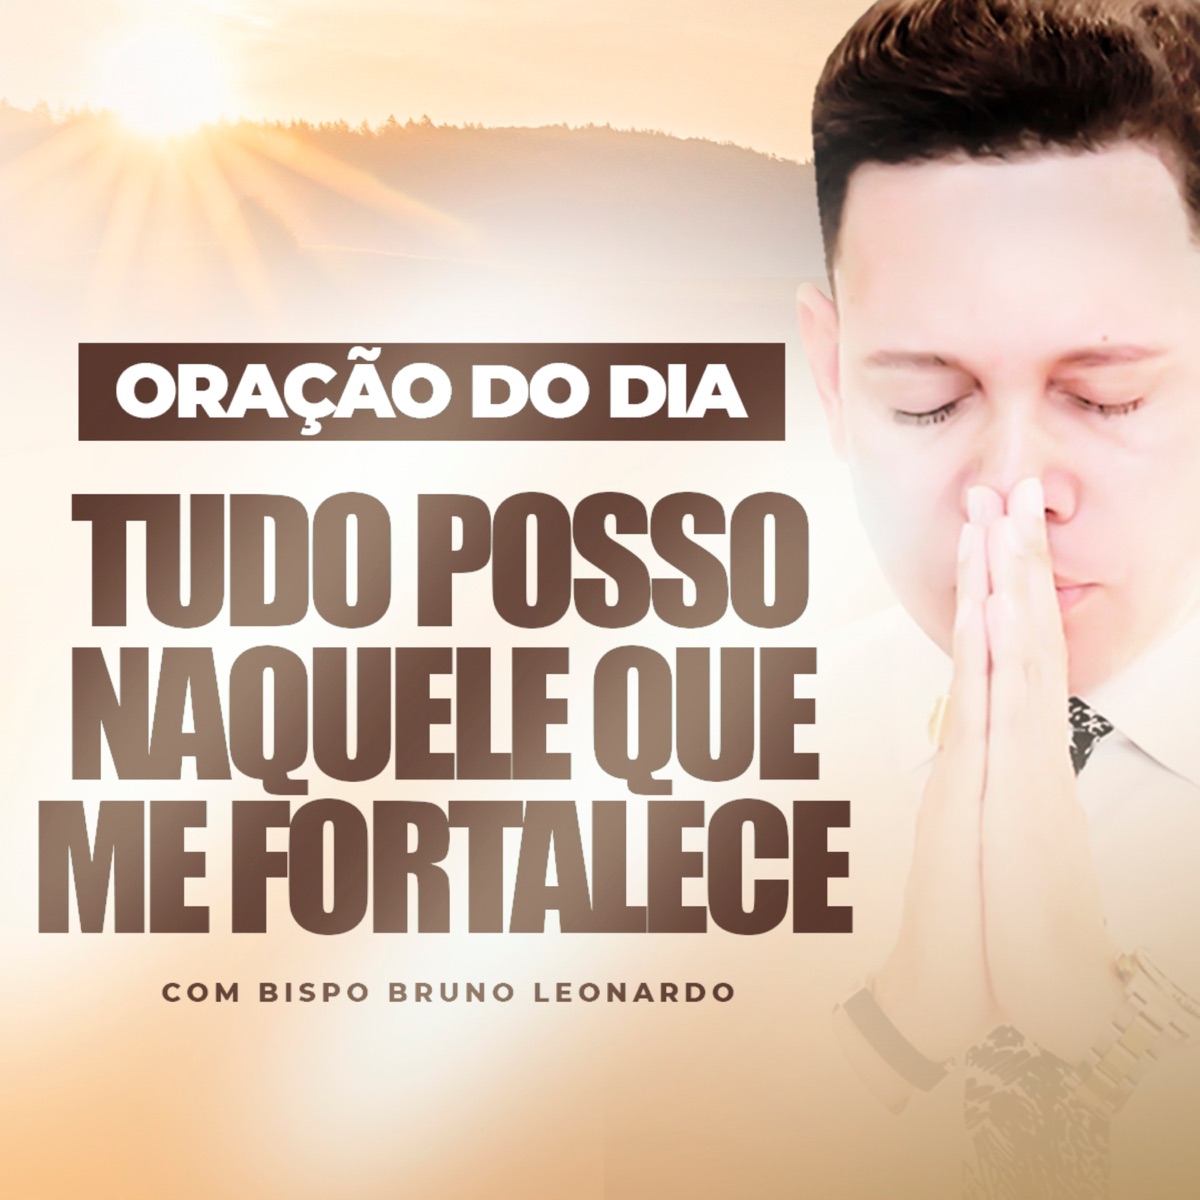 Play Tudo Posso Naquele Que Me Fortalece, Pt. 1 by Bispo Bruno Leonardo on   Music